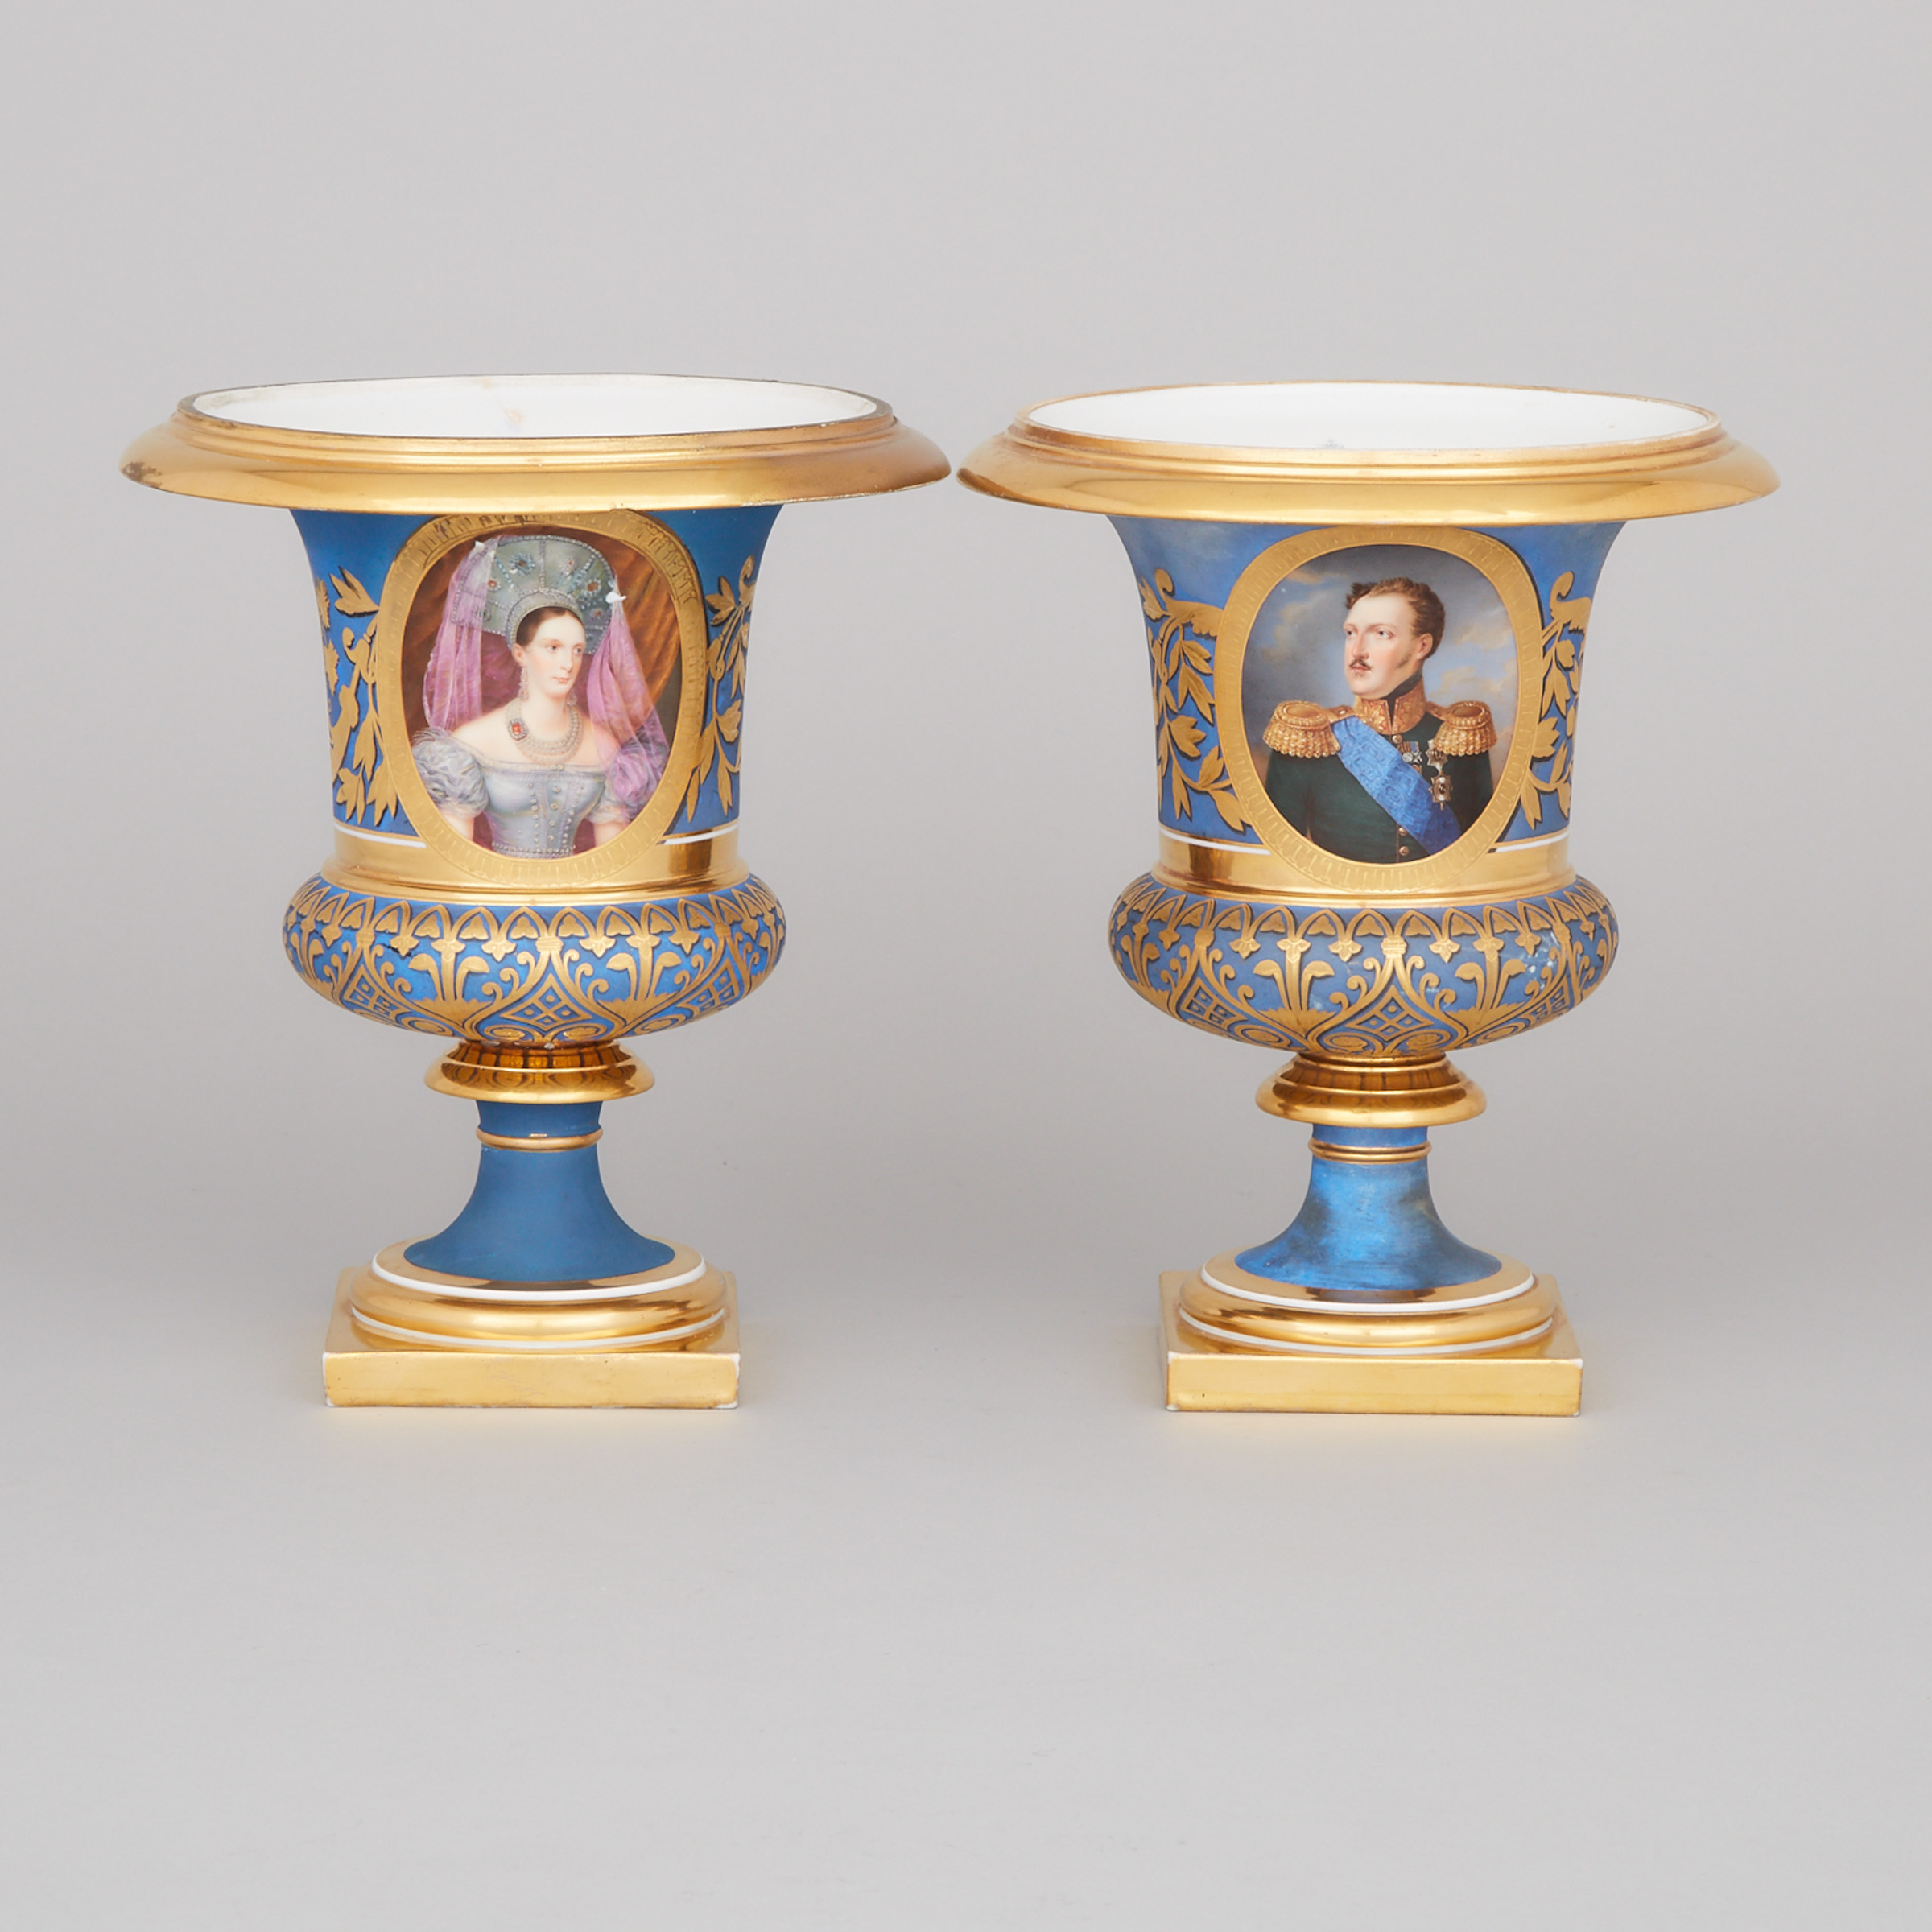 Pair of Russian Imperial Porcelain Portrait Vases, period of Nicholas I, c.1830